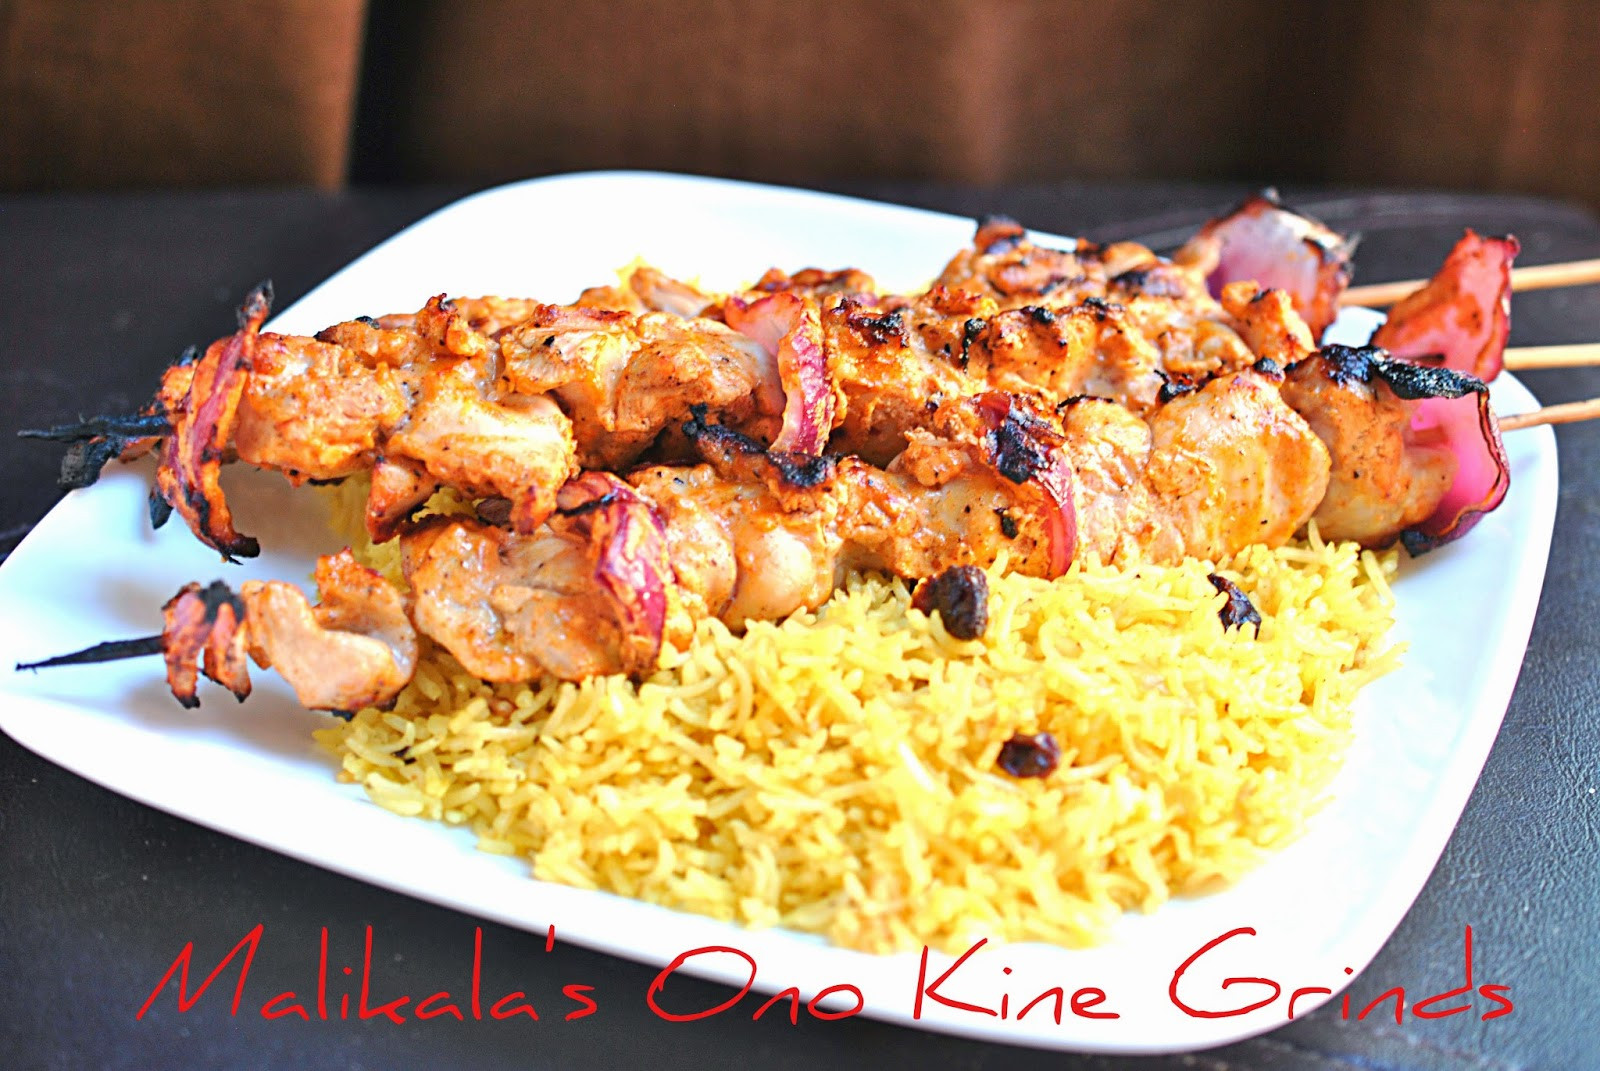 Middle Eastern Chicken Kabob Recipes
 Malikala s o Kine Grinds Middle Eastern Chicken Kebabs